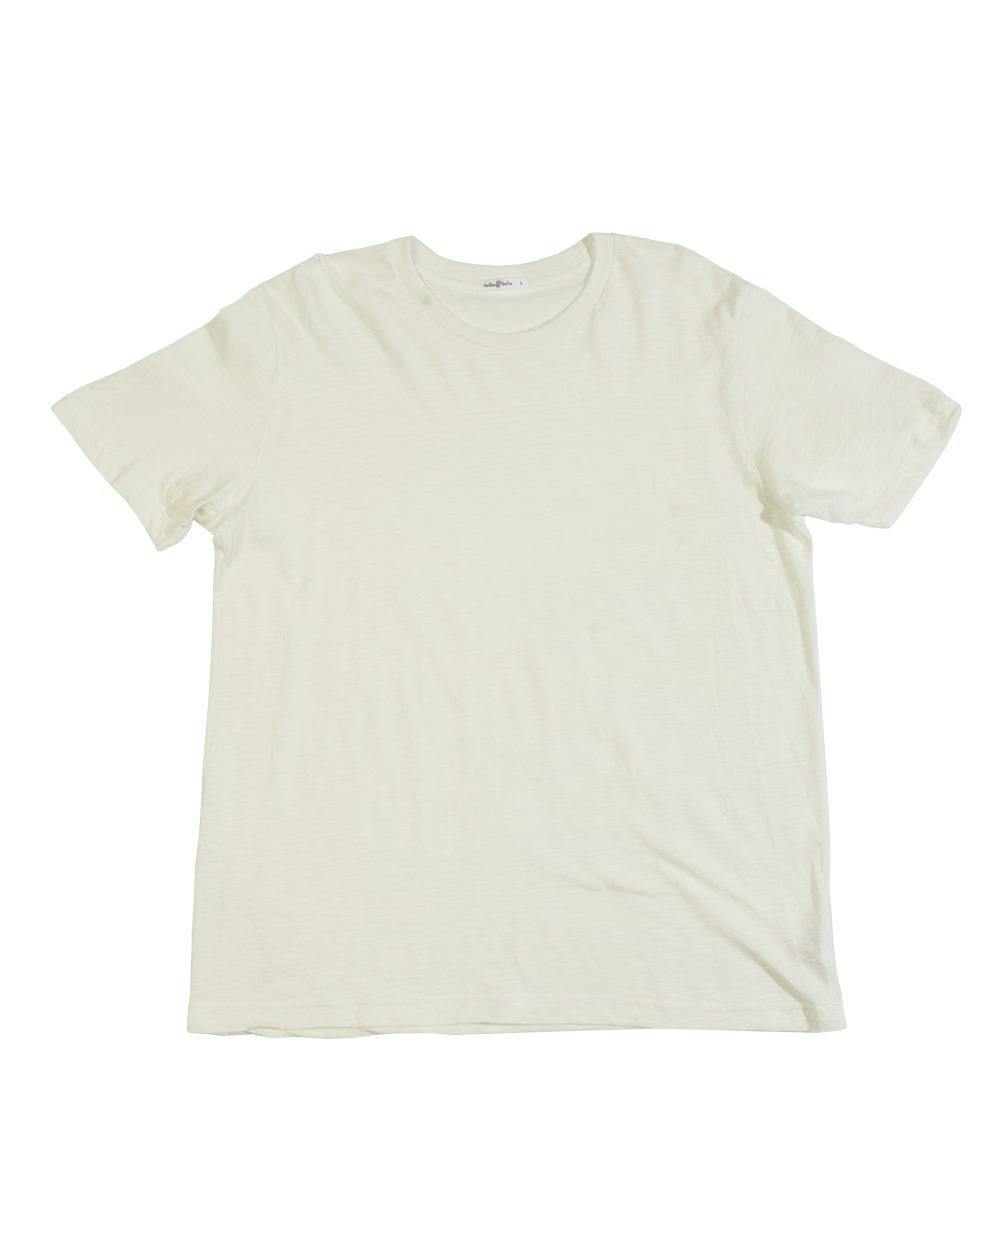 Image for USA-Made T-Shirt - BAFS401